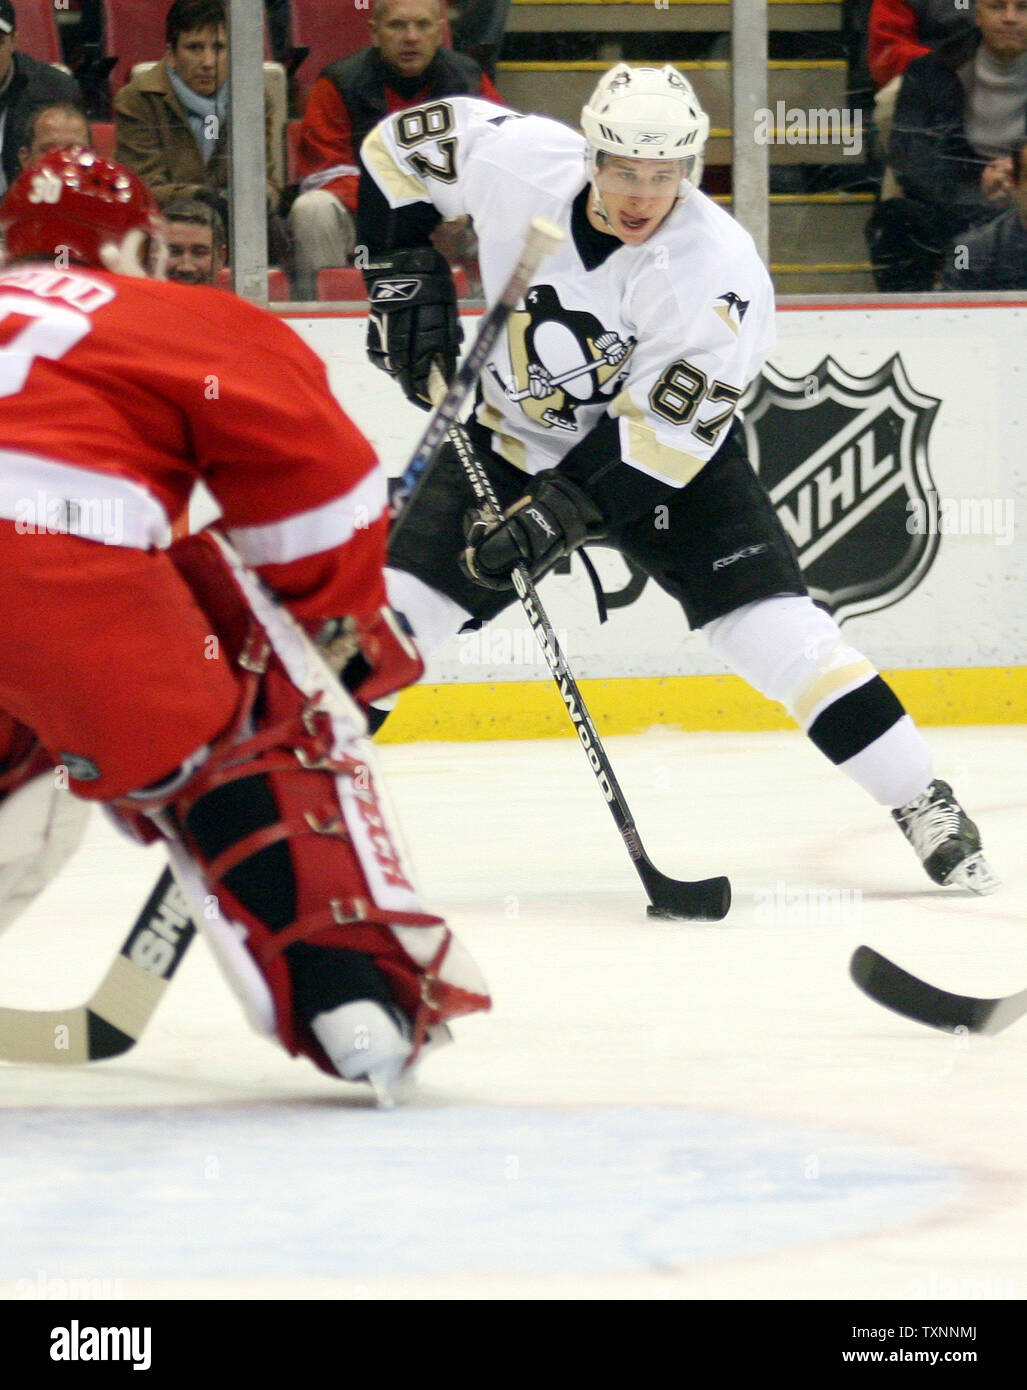 Detroit Red Wings goalie Chris Osgood stops Pittsburgh Penguins